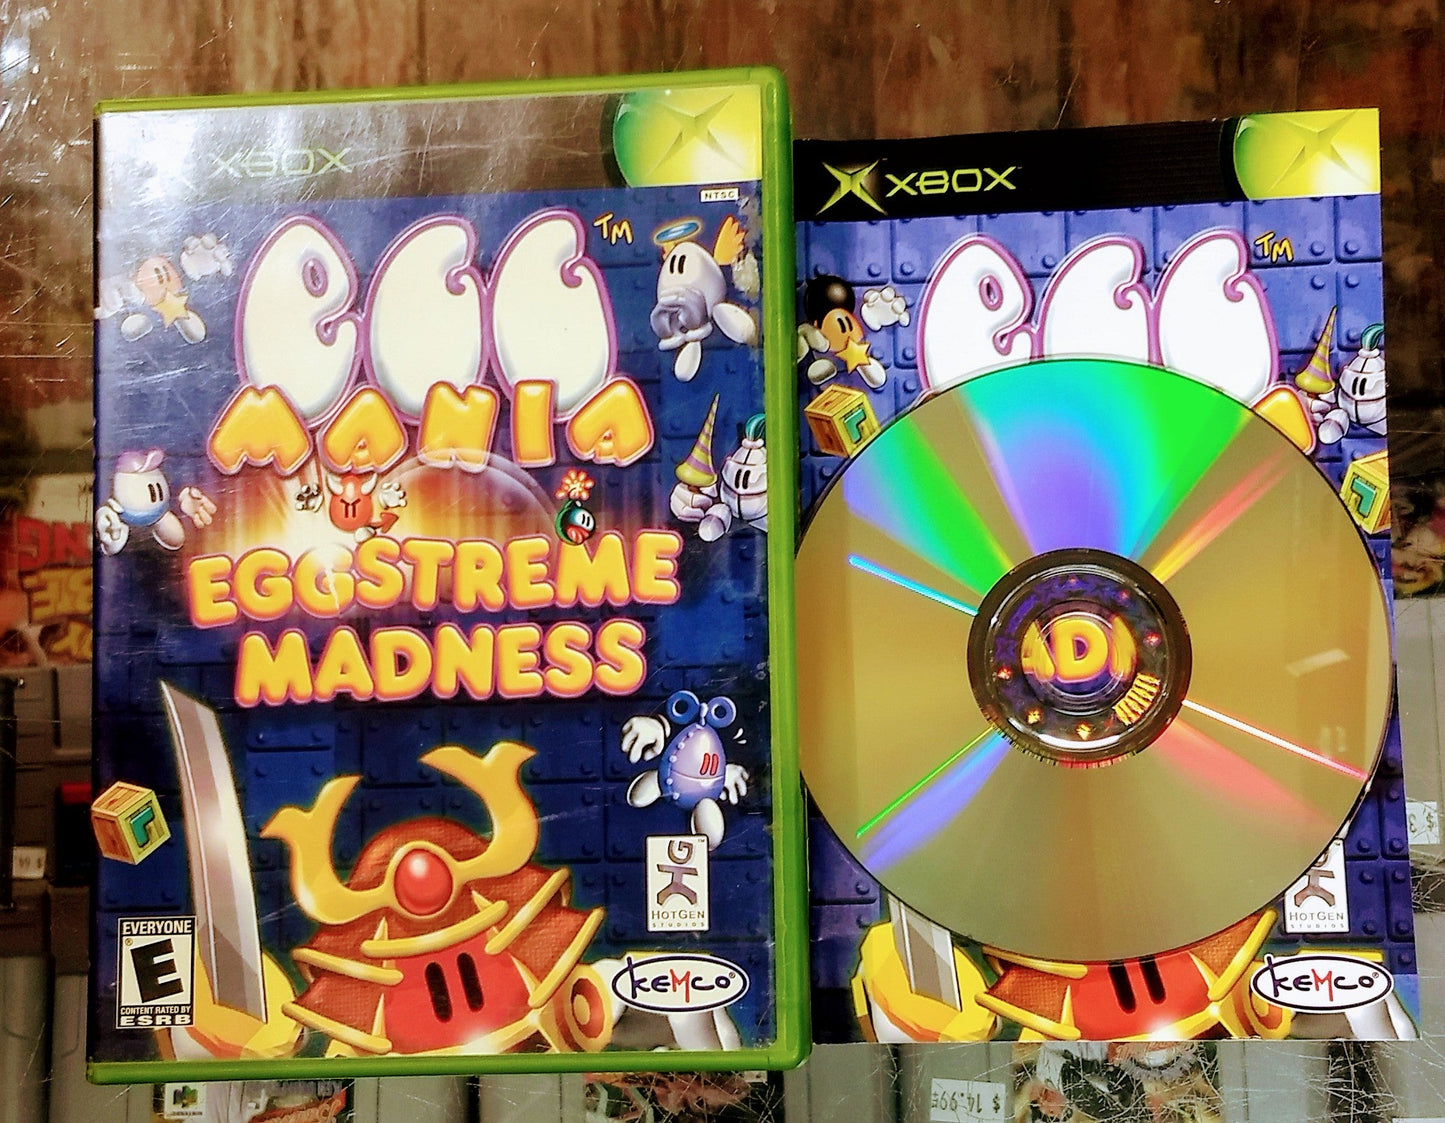 EGG MANIA: EGGSTREME MADNESS (XBOX) - jeux video game-x